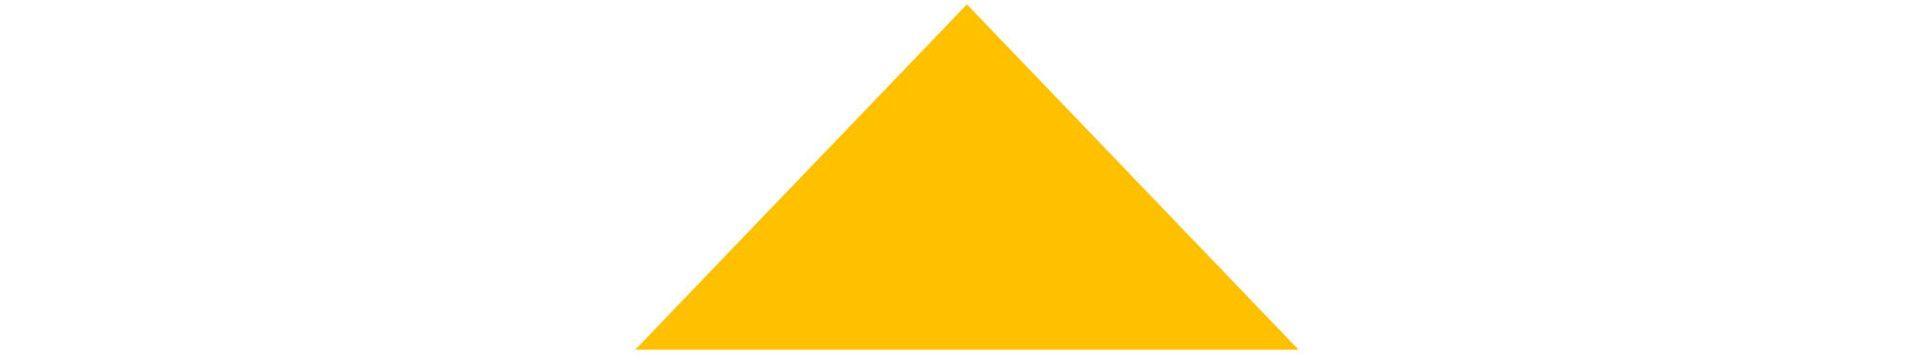 Yellow Triangle Logo - Caterpillar loses logo